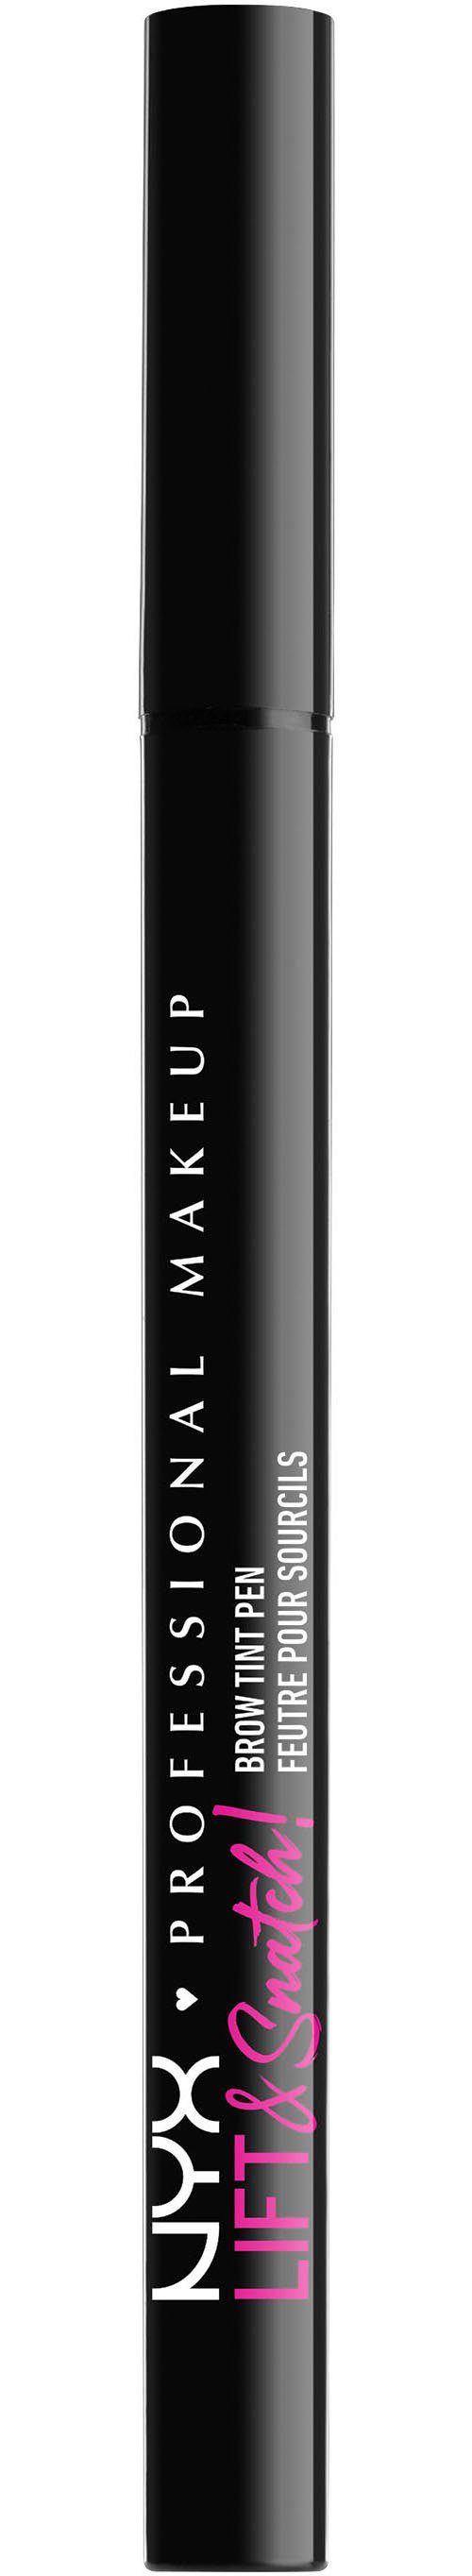 NYX Augenbrauen-Stift Professional Makeup Snatch Brow black Tint Lift & Pen